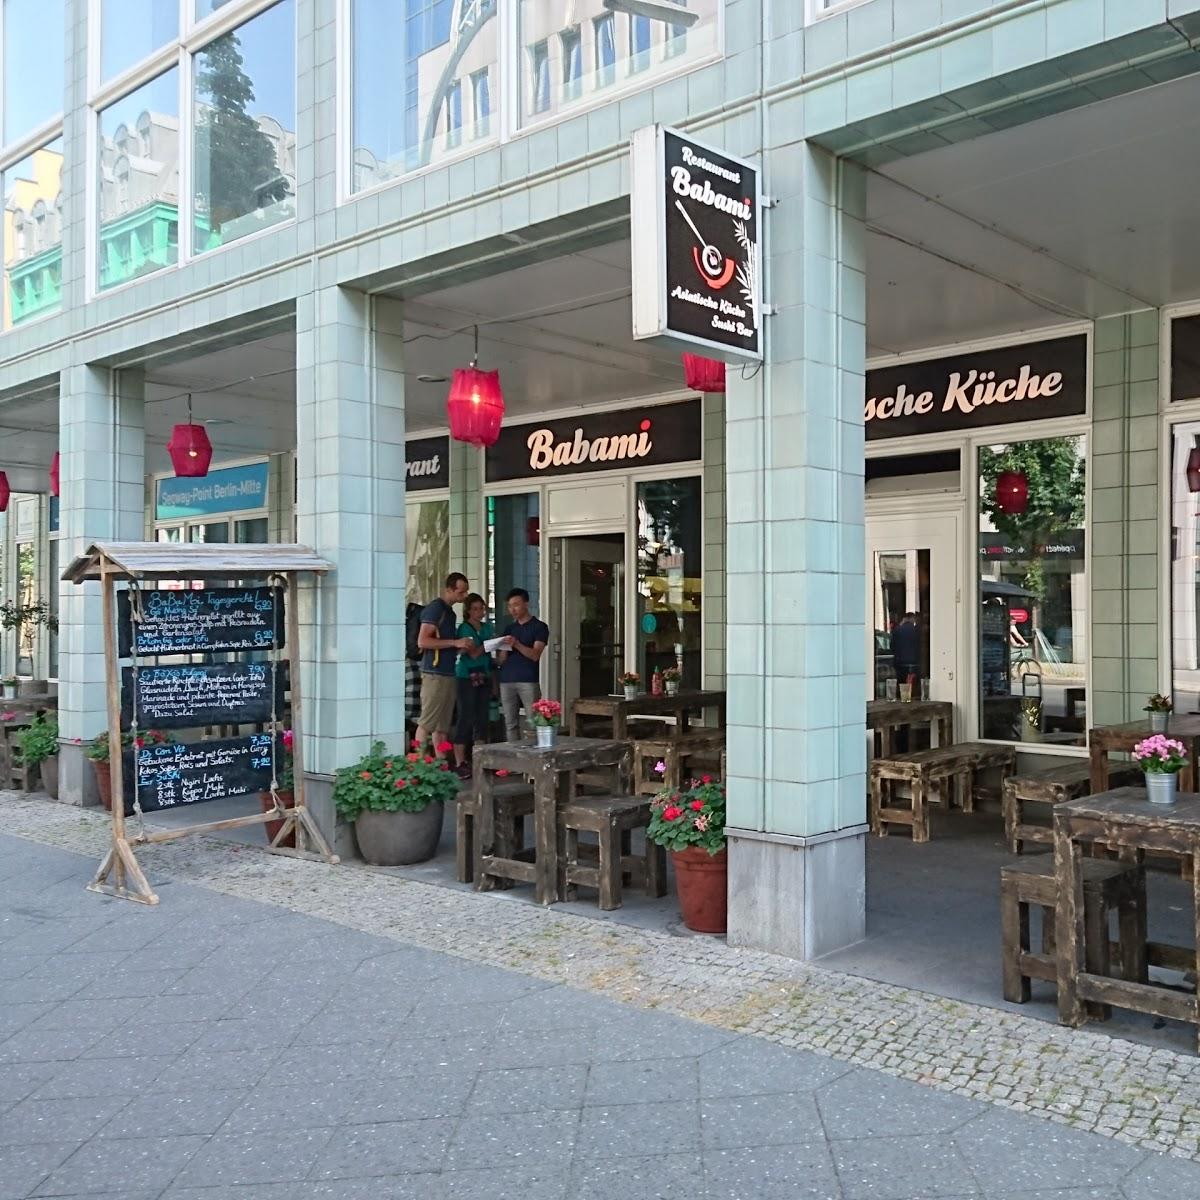 Restaurant "Restaurant Babami" in Berlin